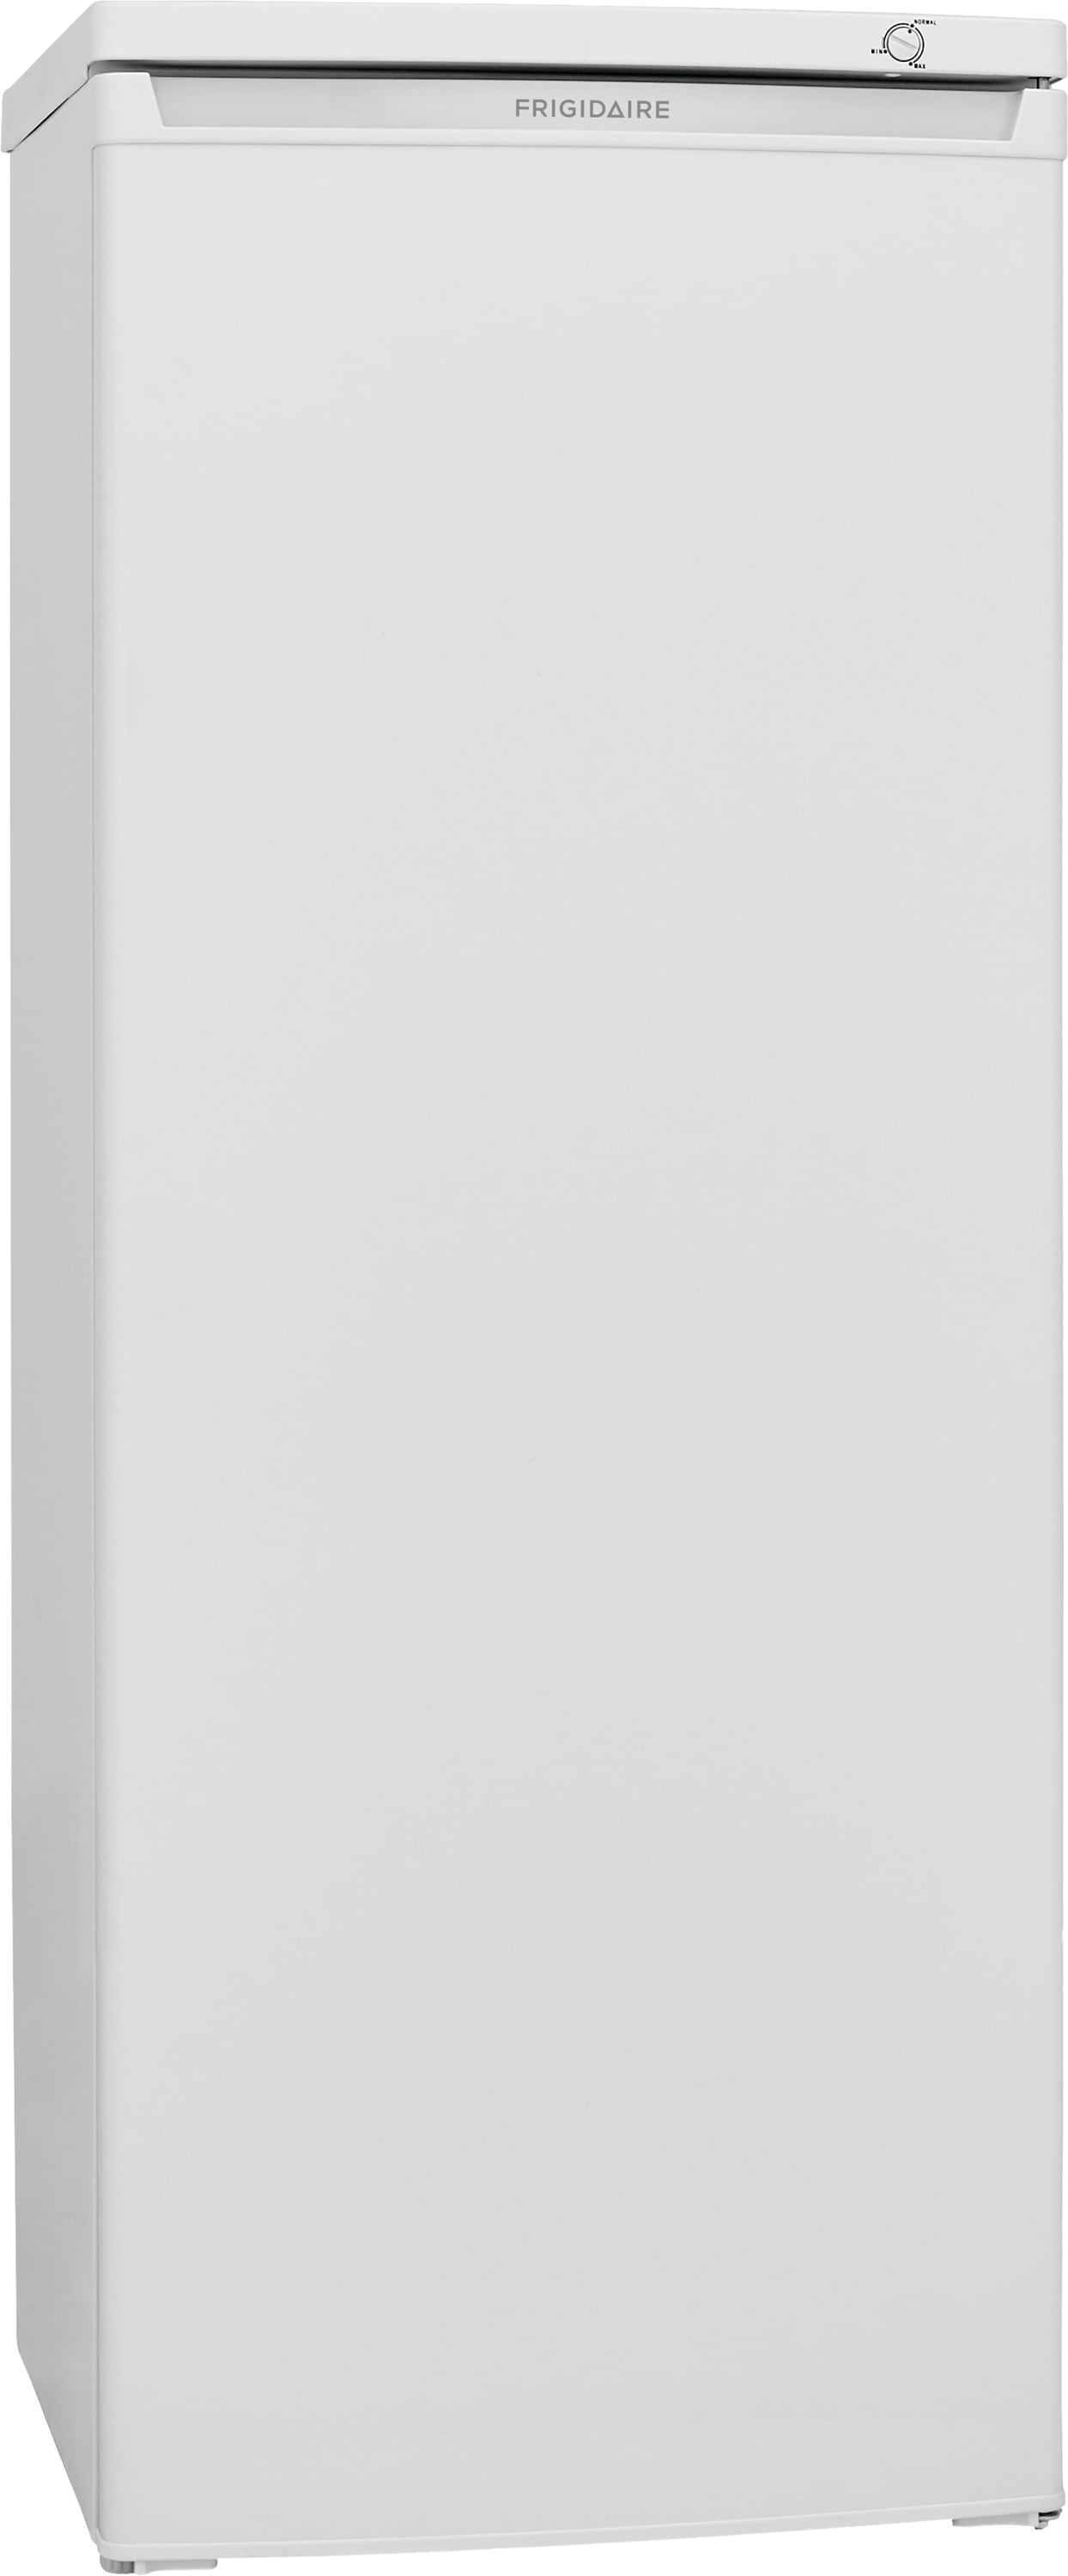 Frigidaire 5.8 Cu. Ft. Upright Freezer in White